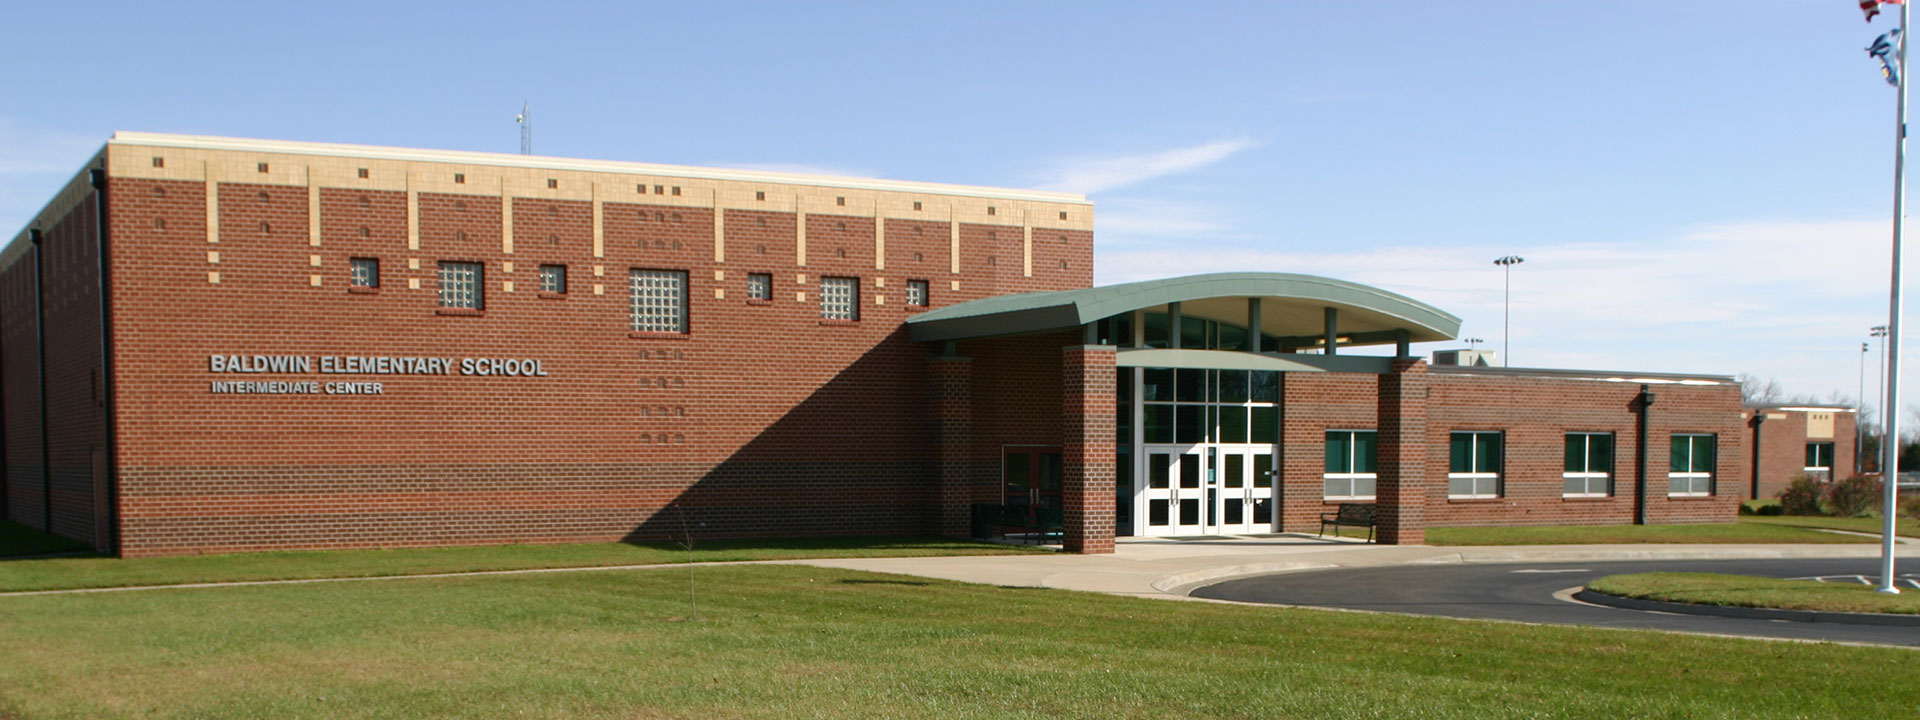 Photo of the Baldwin Elementary School Intermediate Center building exterior